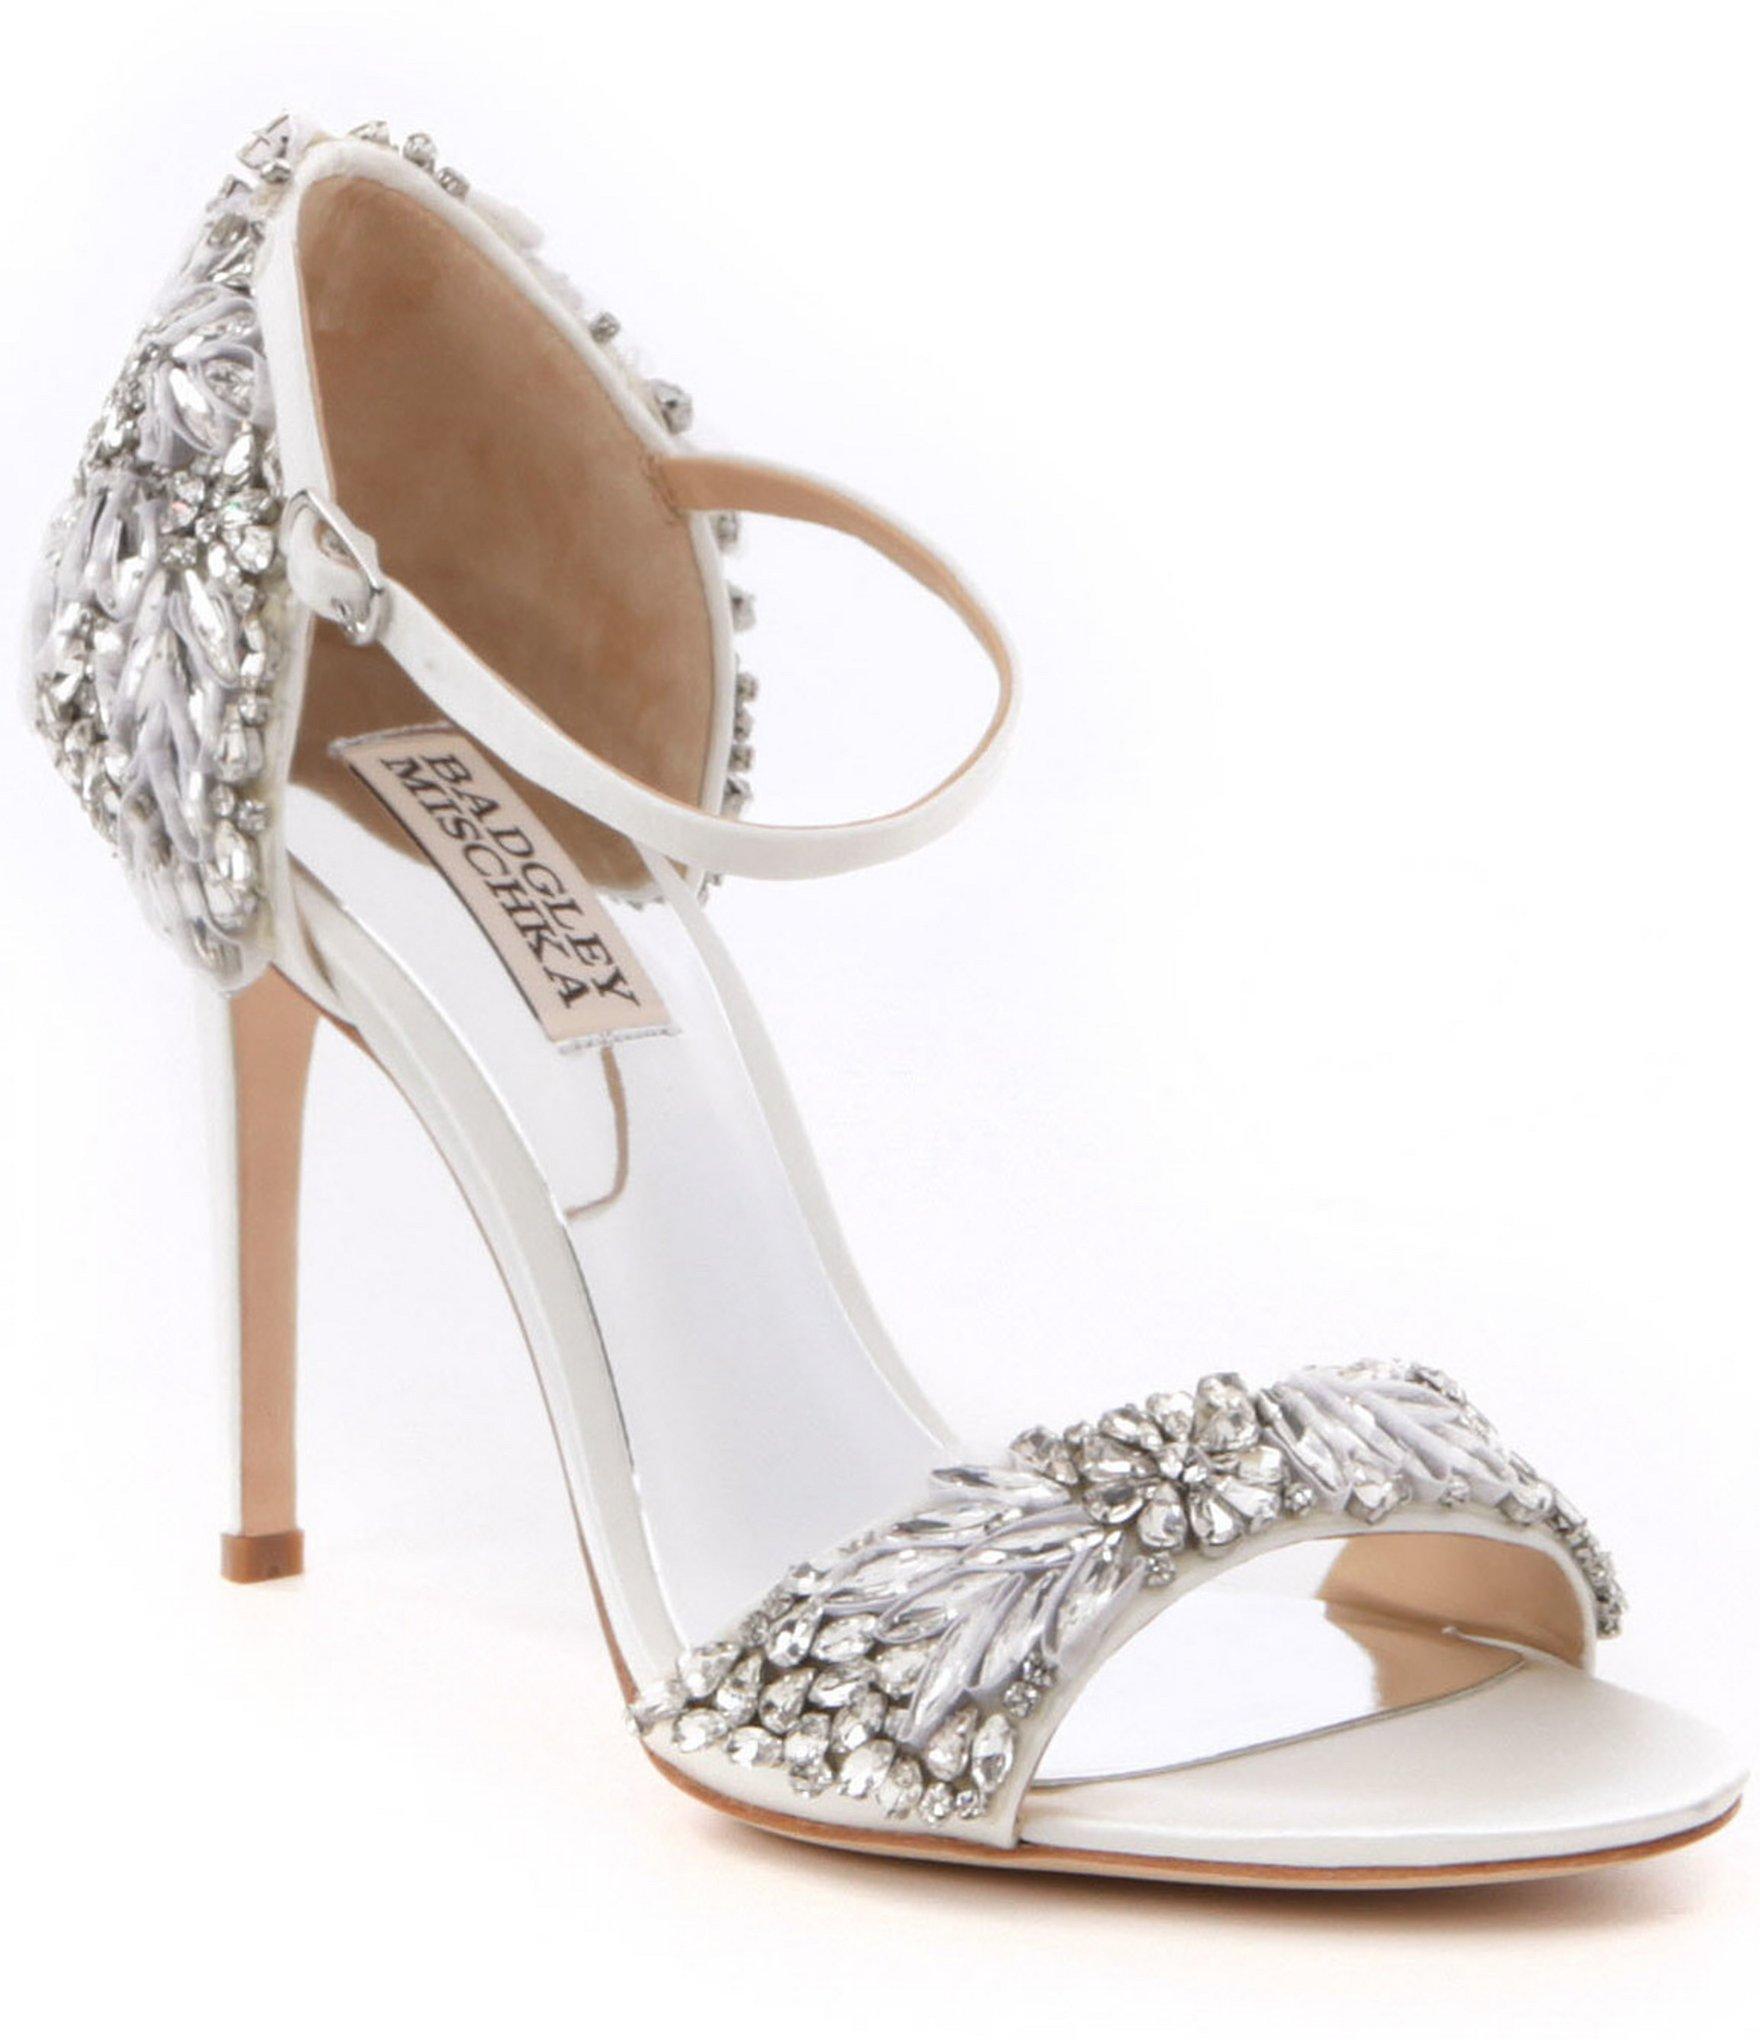 Lyst - Badgley Mischka Tampa Jeweled Satin Dress Sandals in White